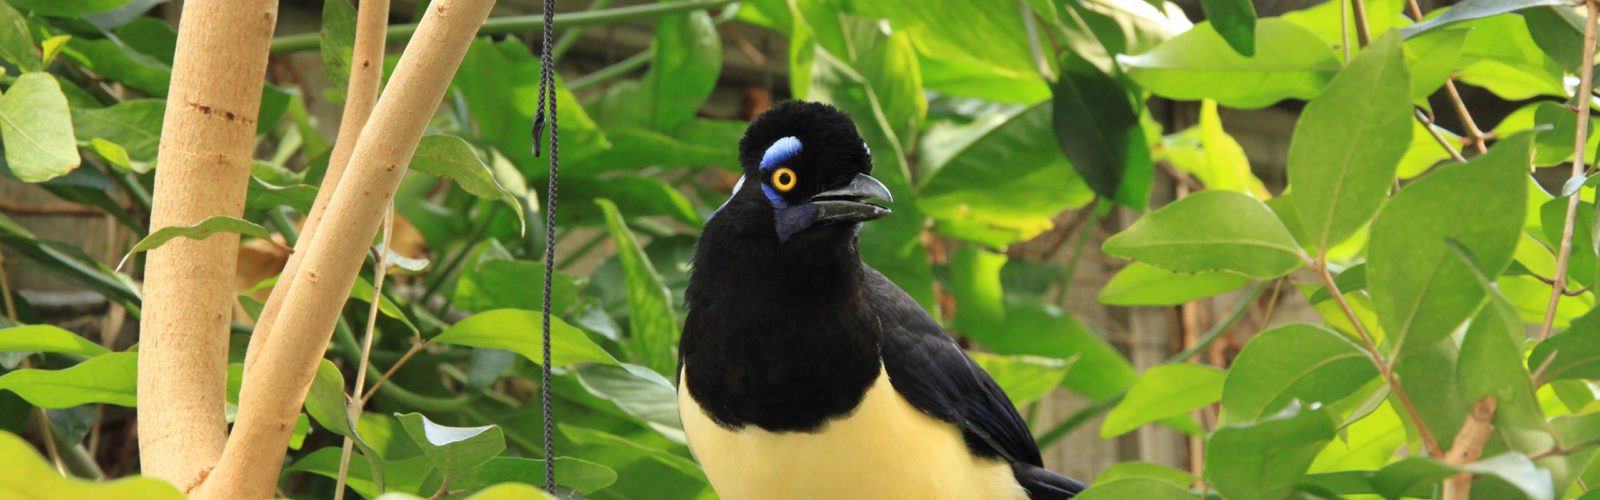 peru-amazon-bird